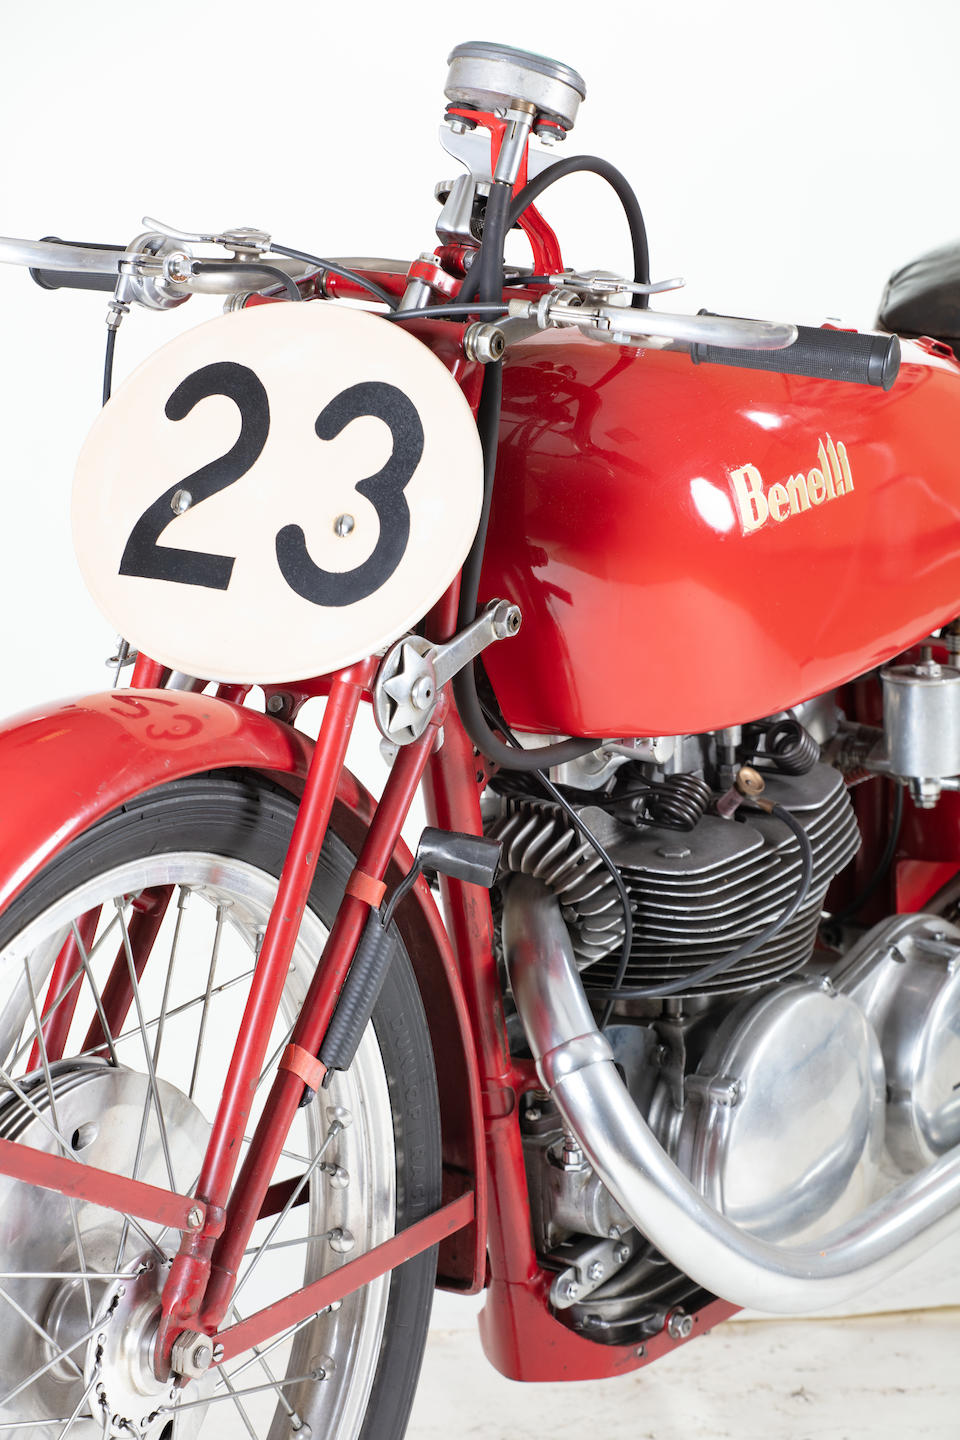 The ex-Dario Ambrosini, World Championship and Isle of Man TT-winning, 1950 Benelli 250cc Grand Prix Racing Motorcycle Frame no. S.S5001